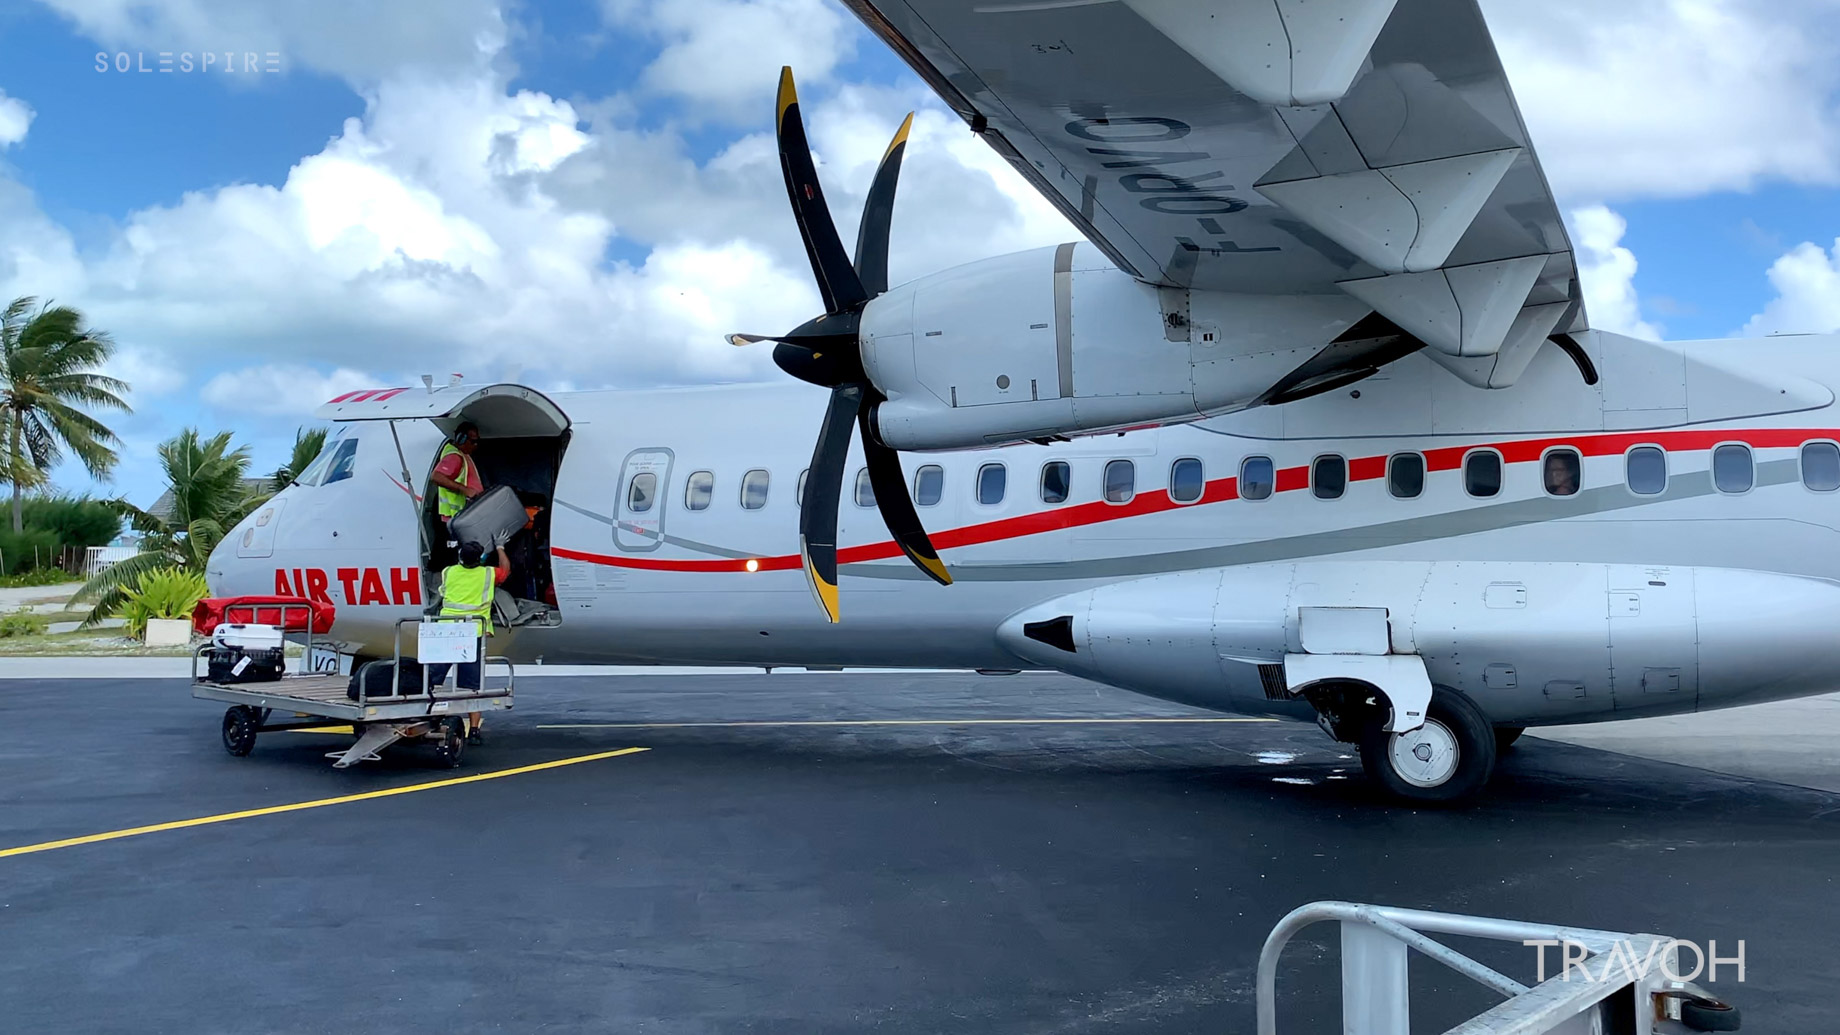 Airplane Landed - Bora Bora Airport - Motu Tane Private Island Vacation - French Polynesia - Travel